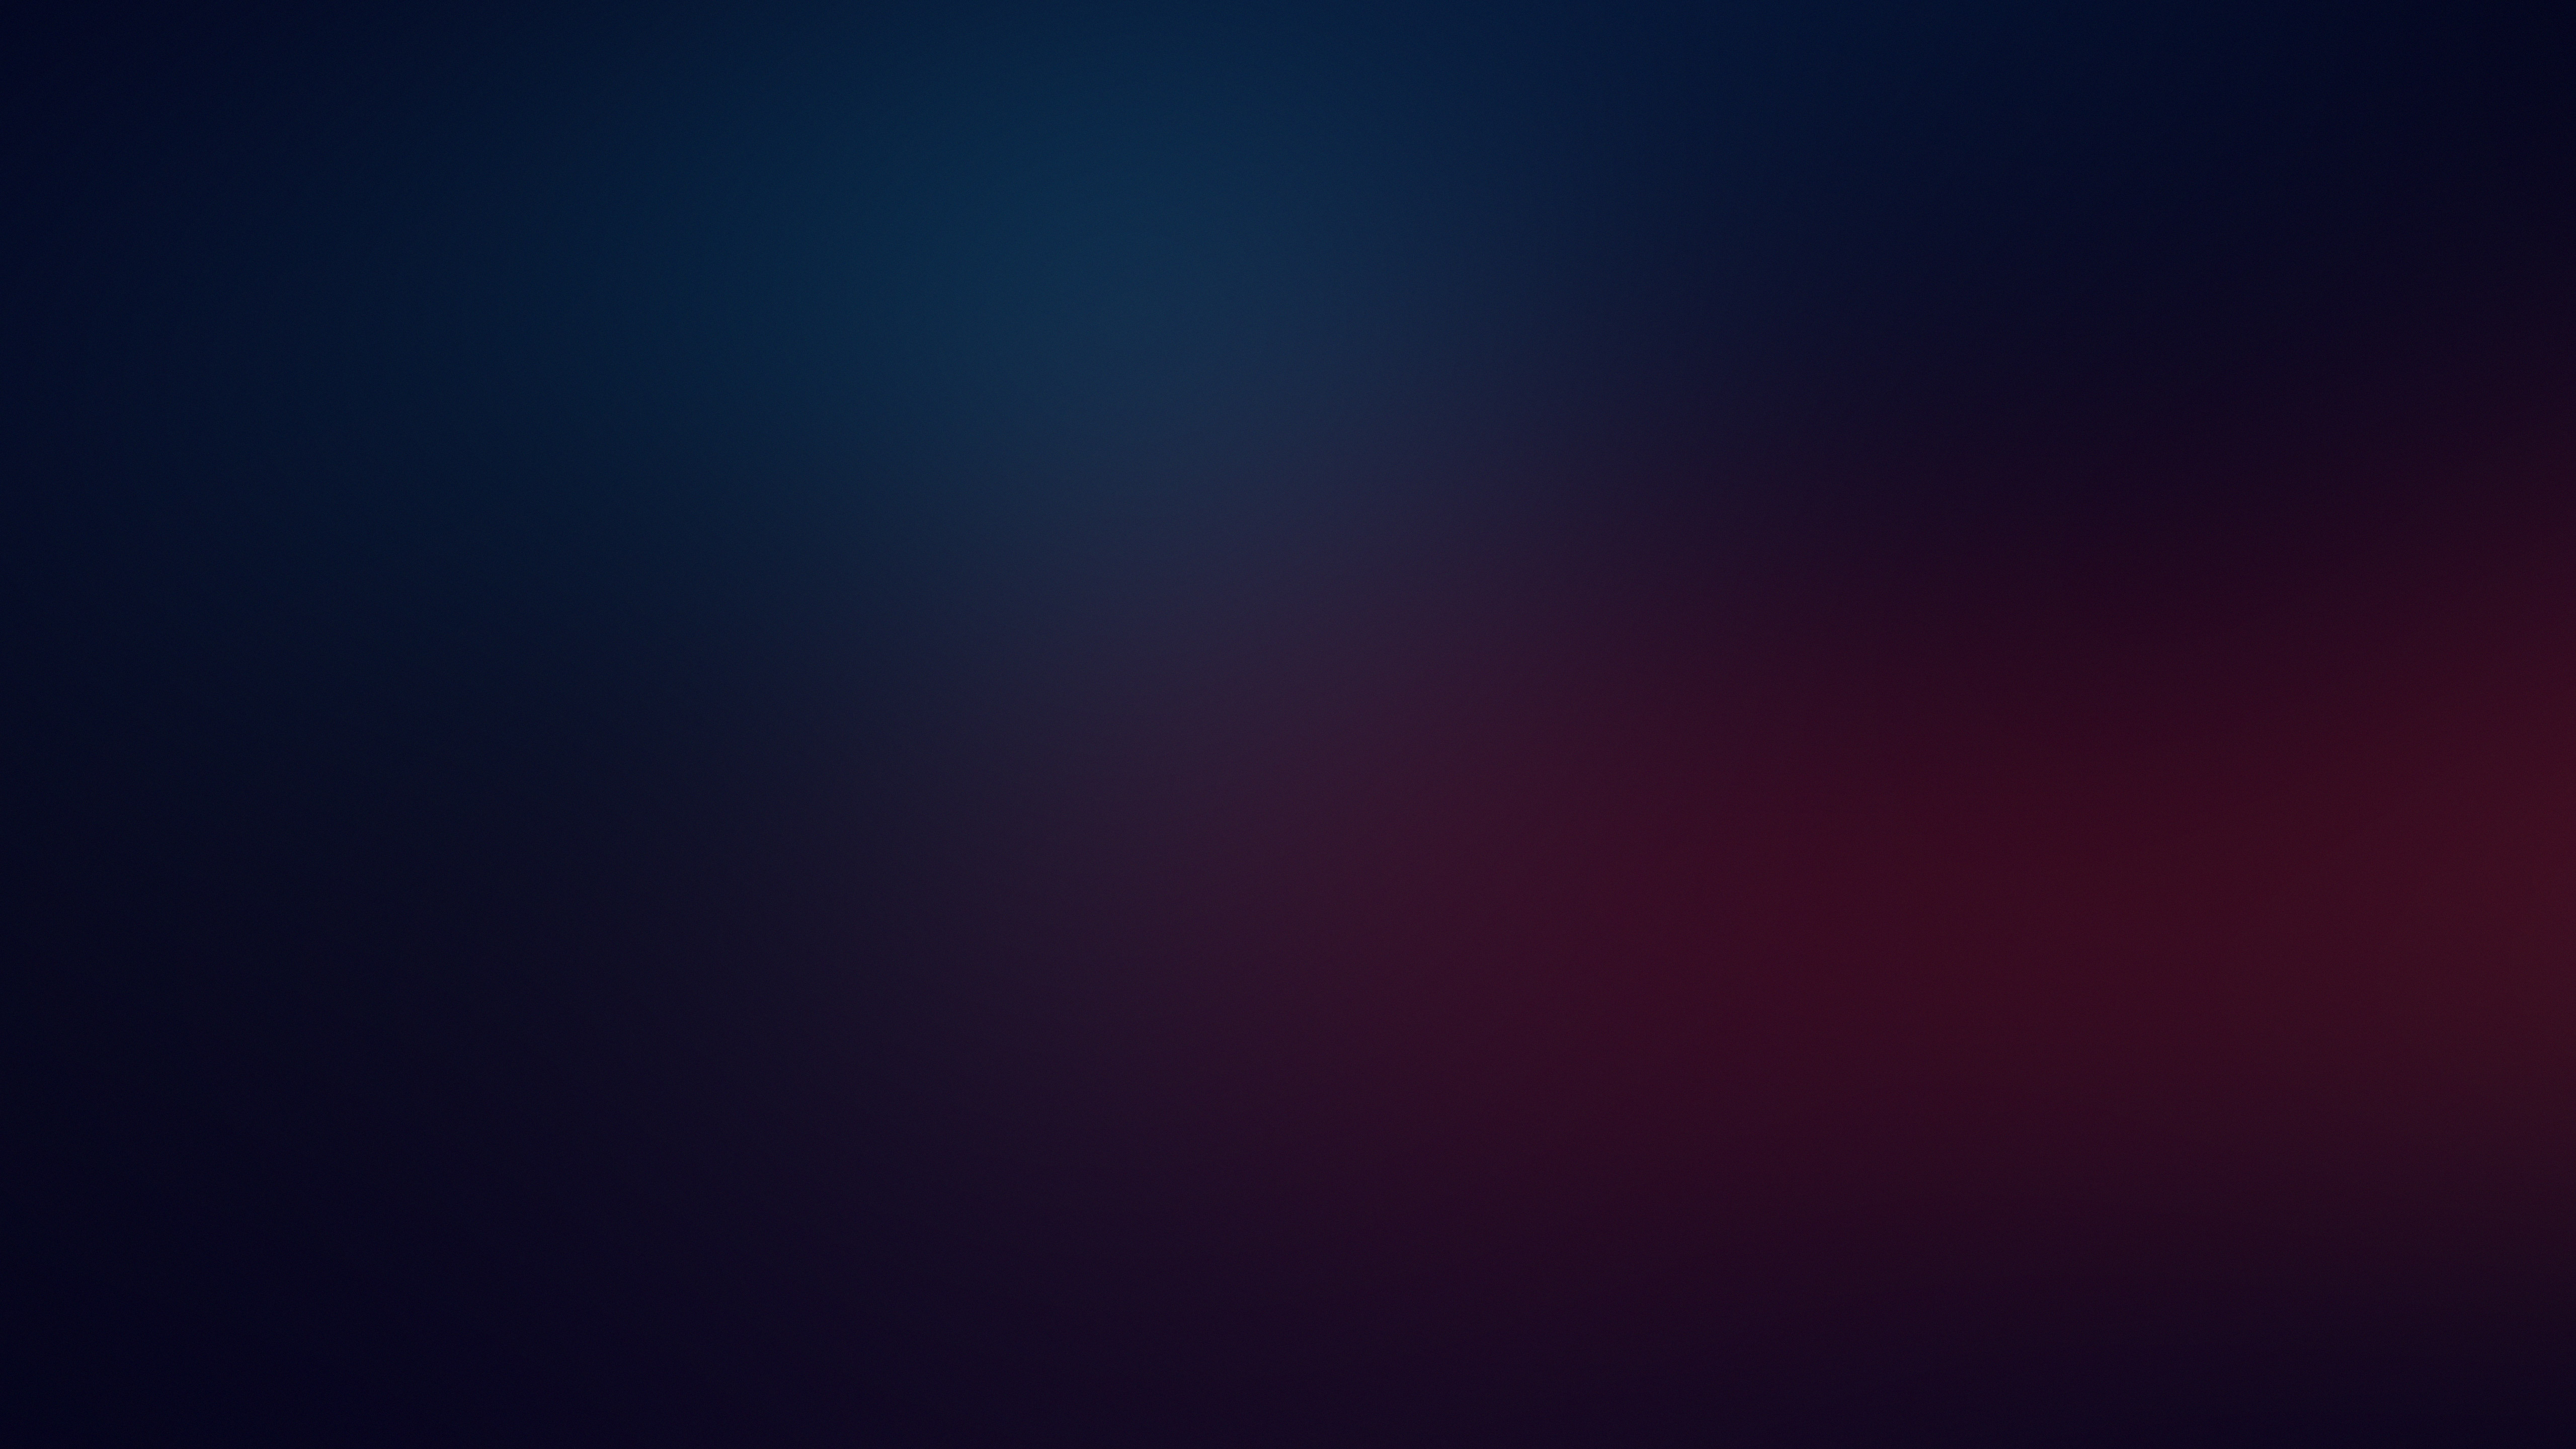 Dark Blur Abstract 4k, HD Abstract, 4k Wallpaper, Image